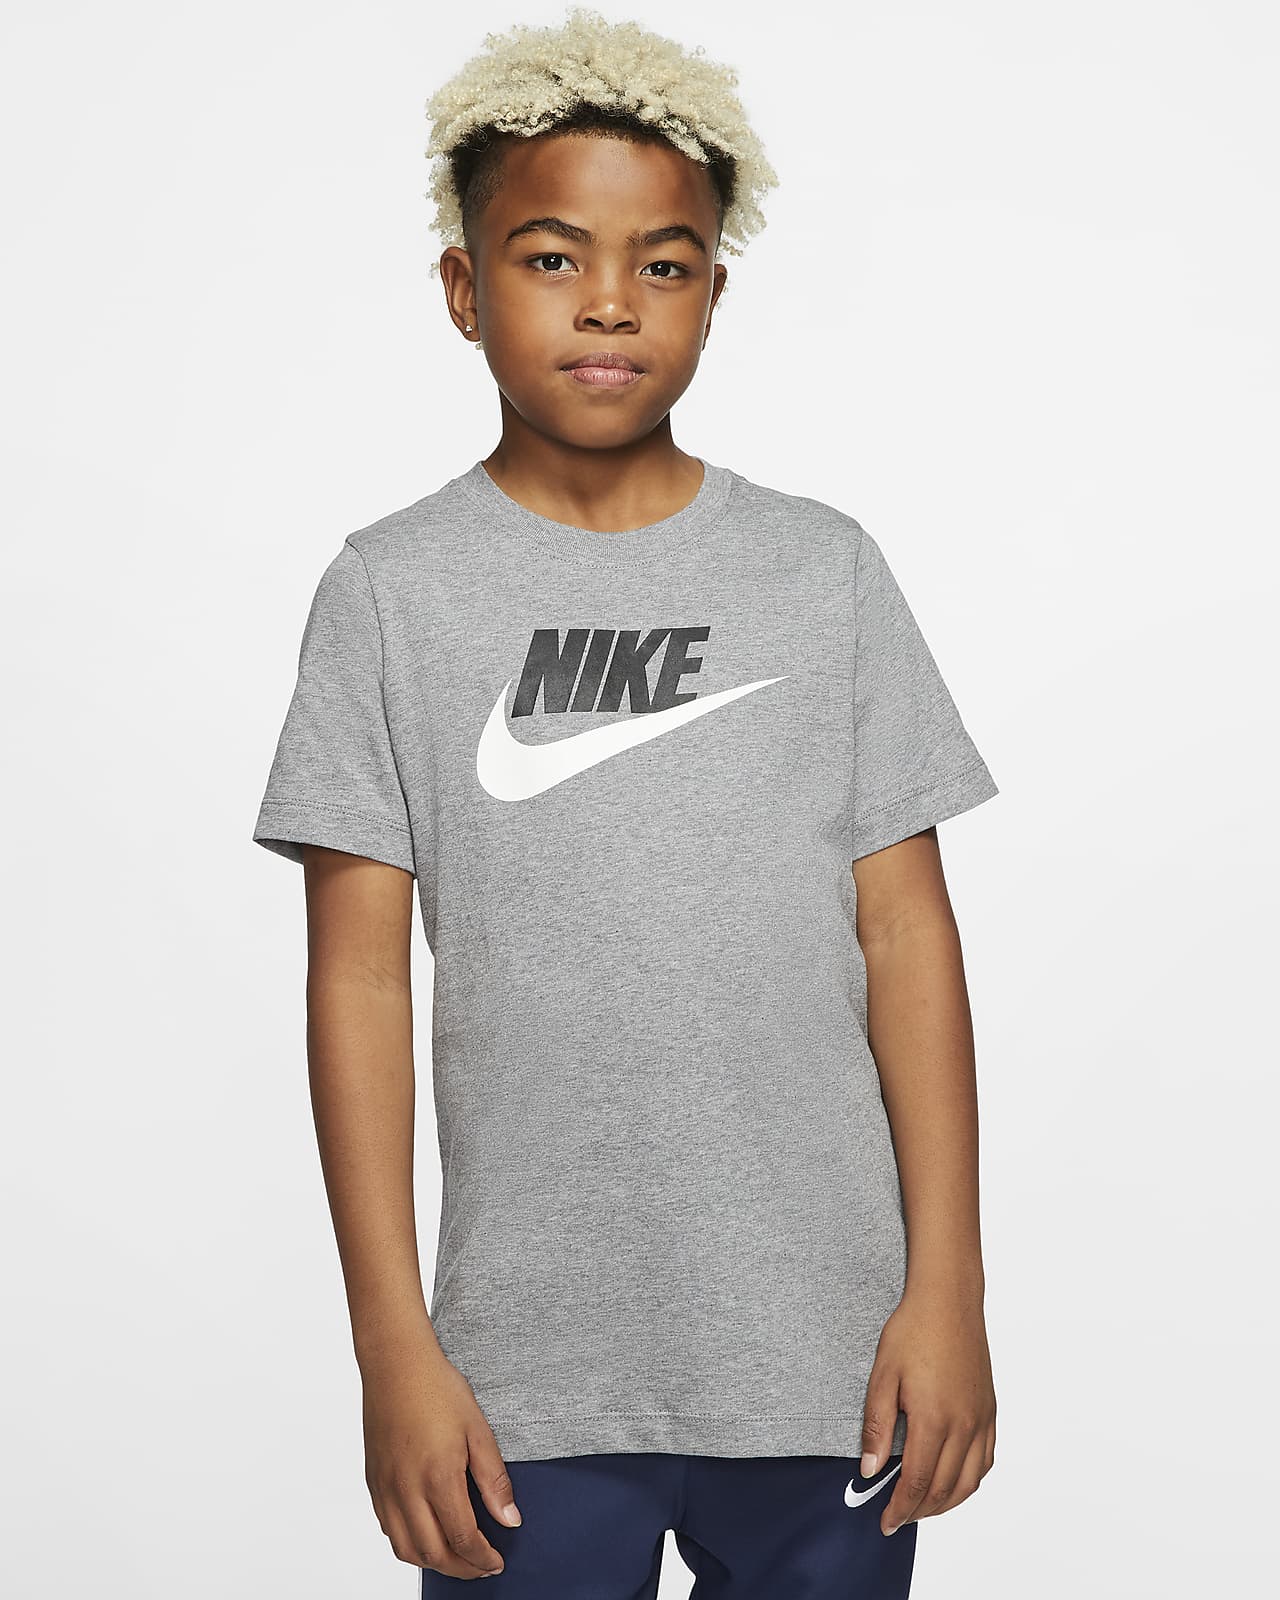 Nike Sportswear Pamuklu Genç Çocuk Tişörtü